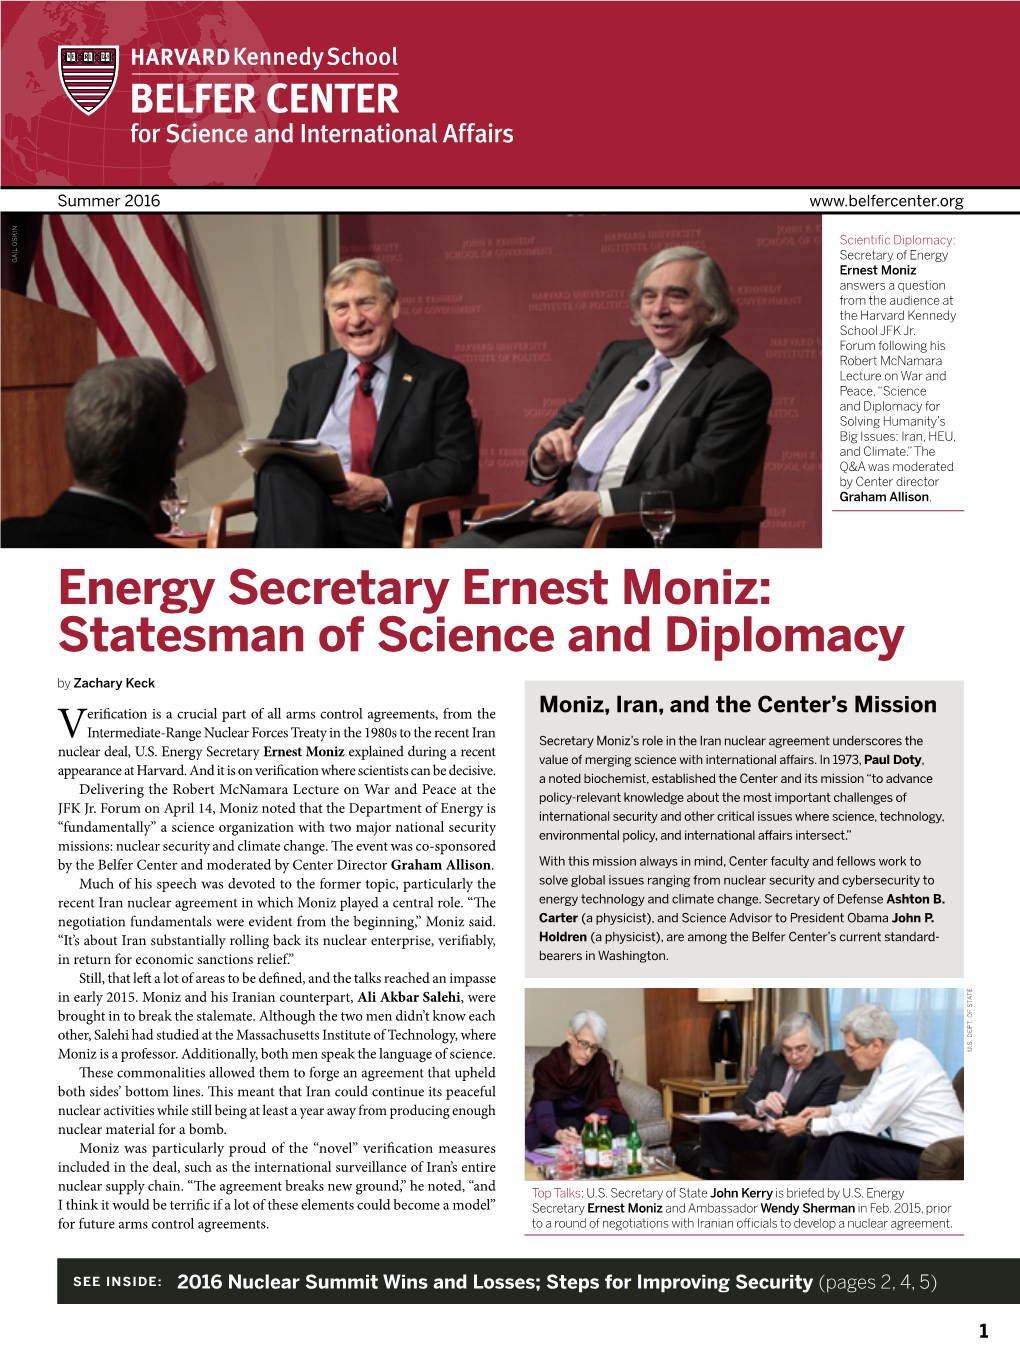 Energy Secretary Ernest Moniz: Statesman of Science and Diplomacy